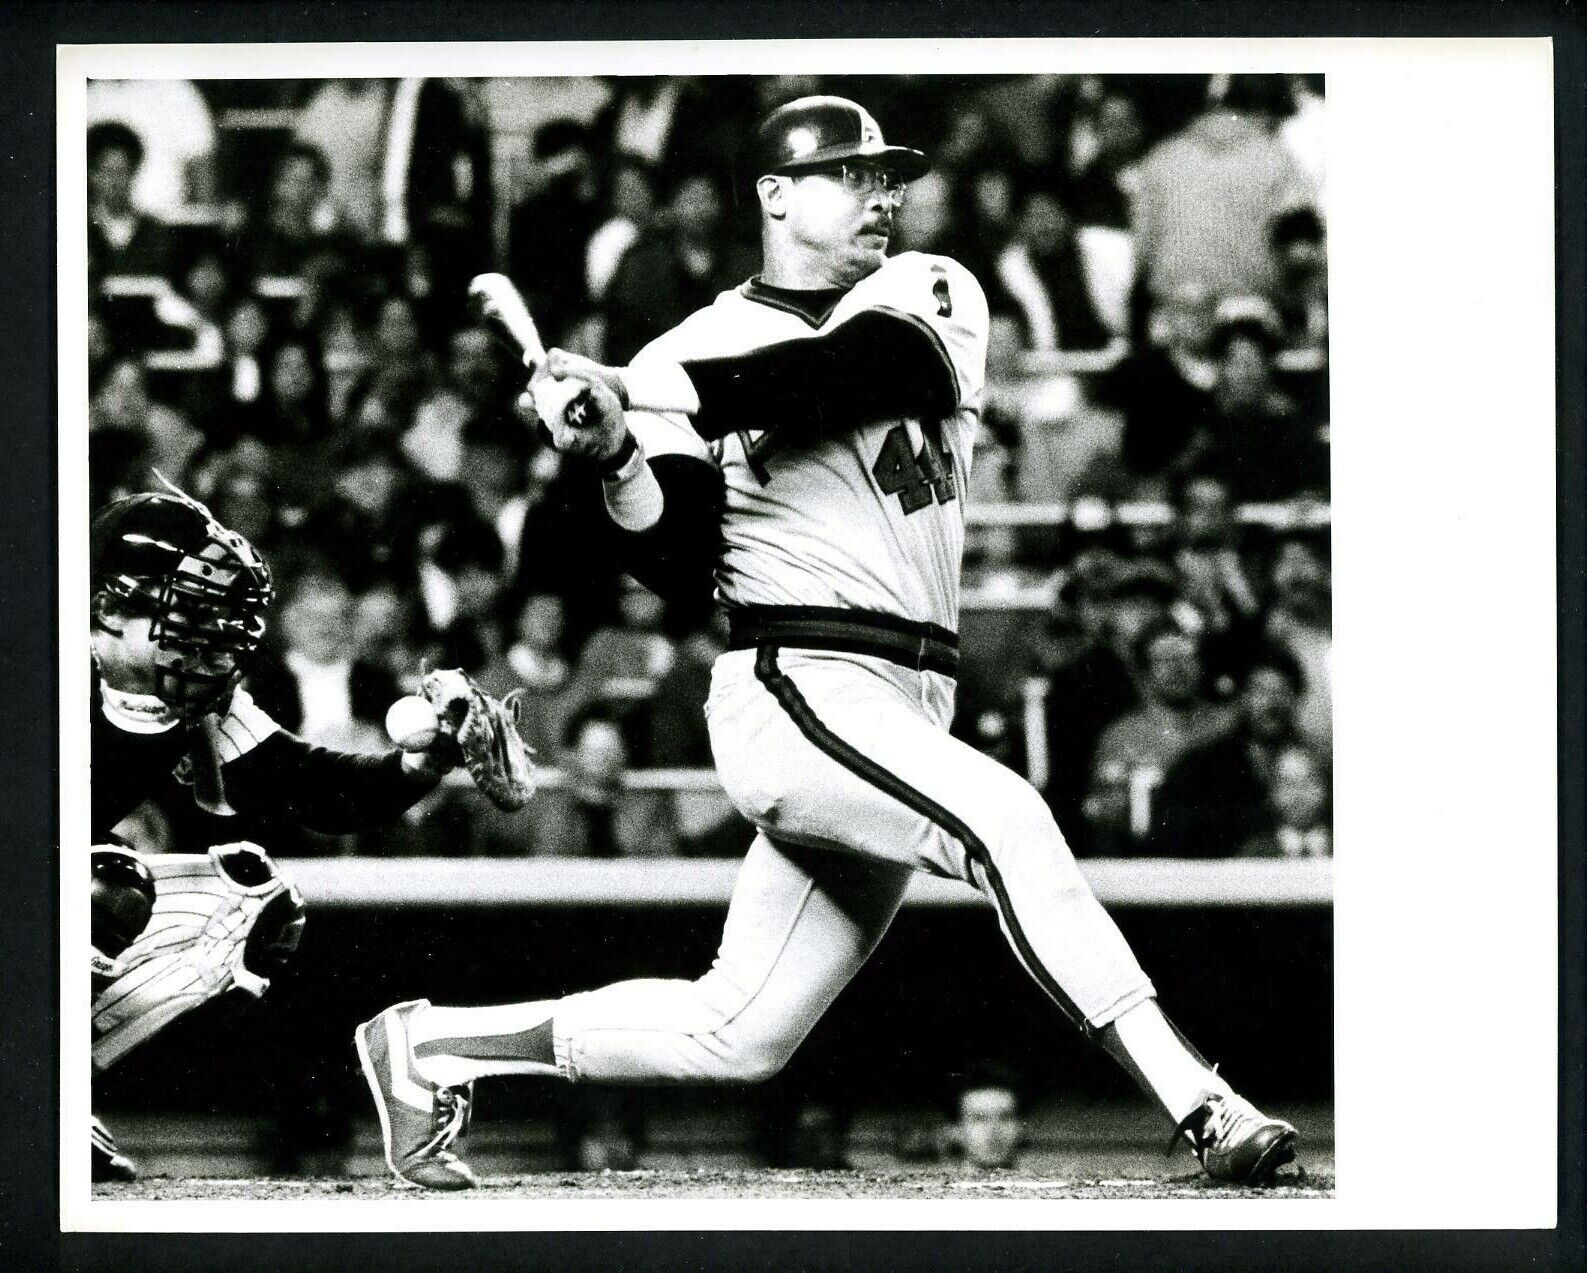 Reggie Jackson batting circa 1980s Press Original Photo Poster painting California Angels